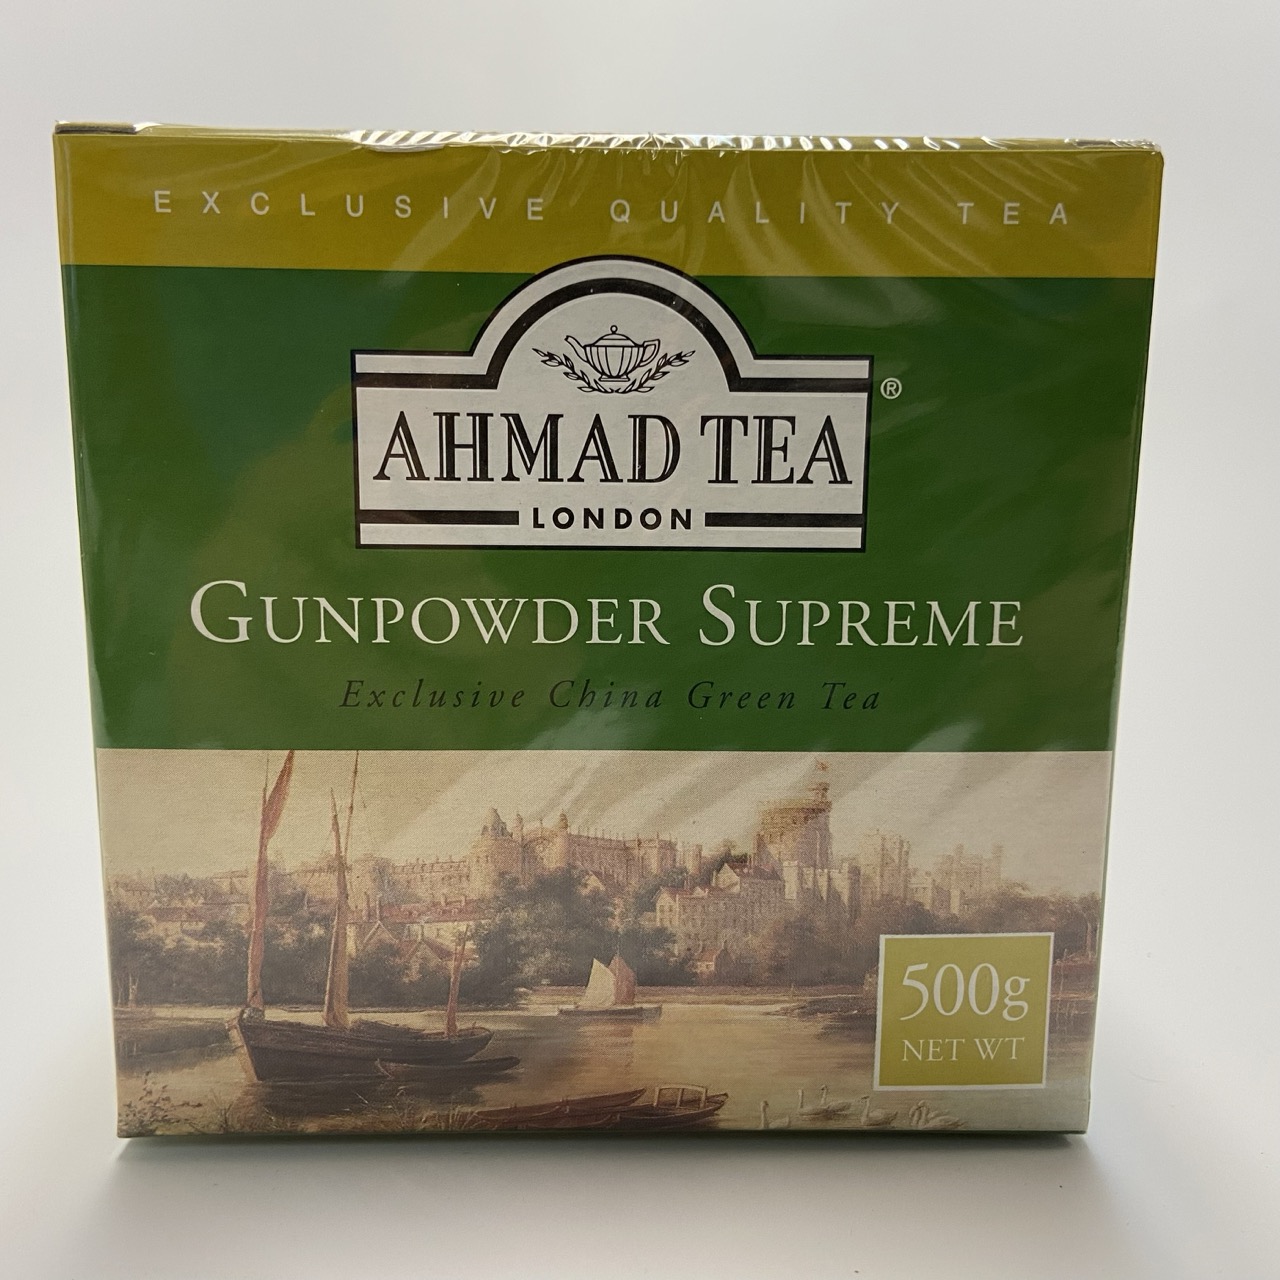 Ahmad Tea - Gunpowder Supreme - Exclusive China Green Tea - 500gm 